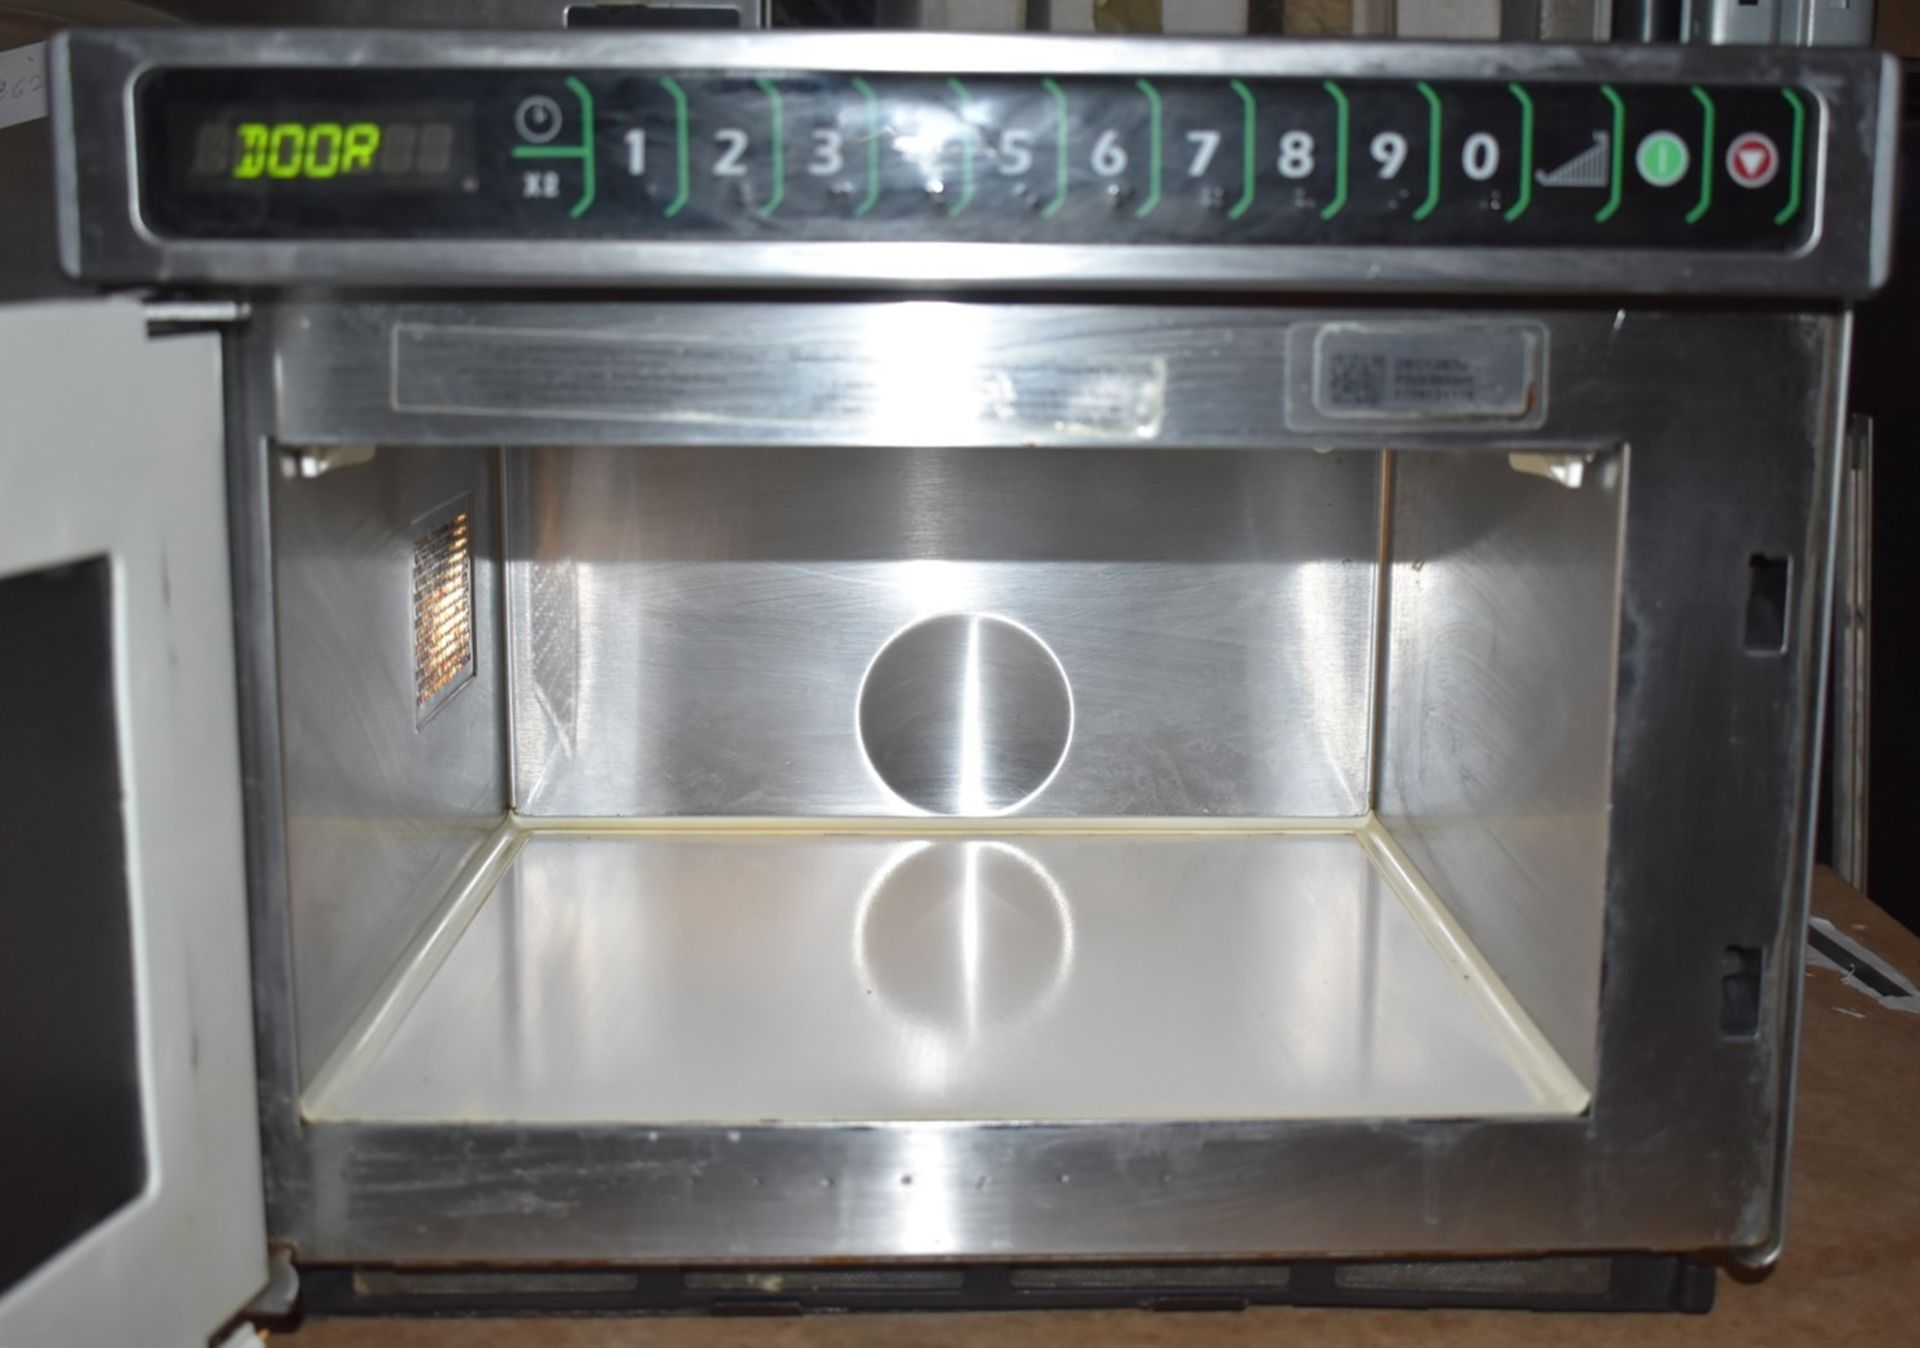 1 x Menumaster Commercial Microwave Oven - Model DEC14E2U - 1.4kW, 13A, 17Ltr - 2017 Model - - Image 3 of 13